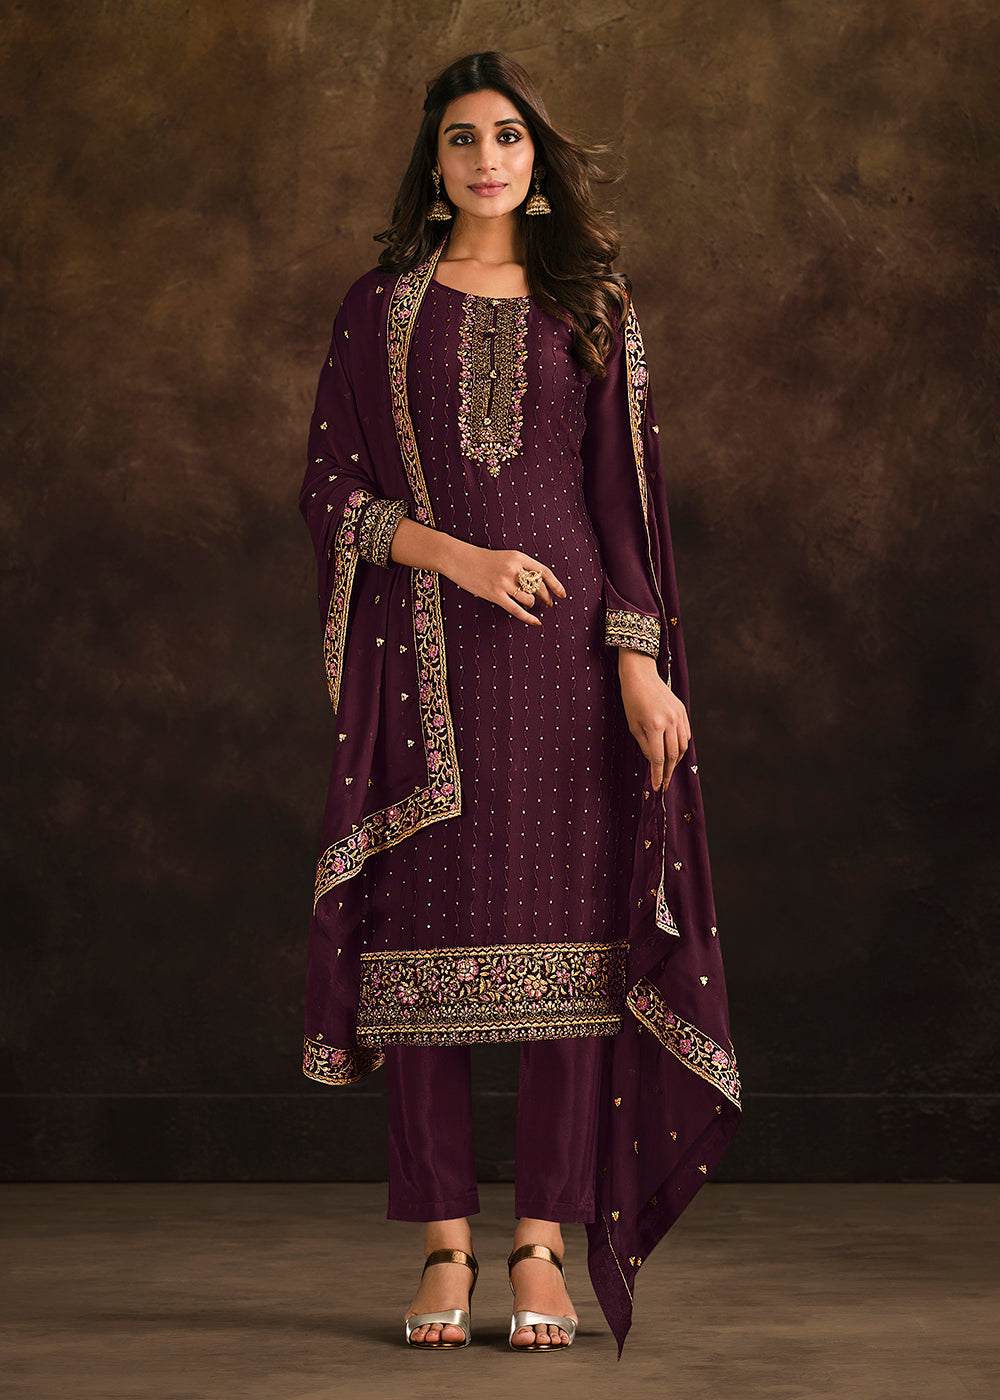 Buy Now Fancy Georgette Radiant Purple Pakistani Style Salwar Suit Online in USA, UK, Canada, Germany, Australia & Worldwide at Empress Clothing.